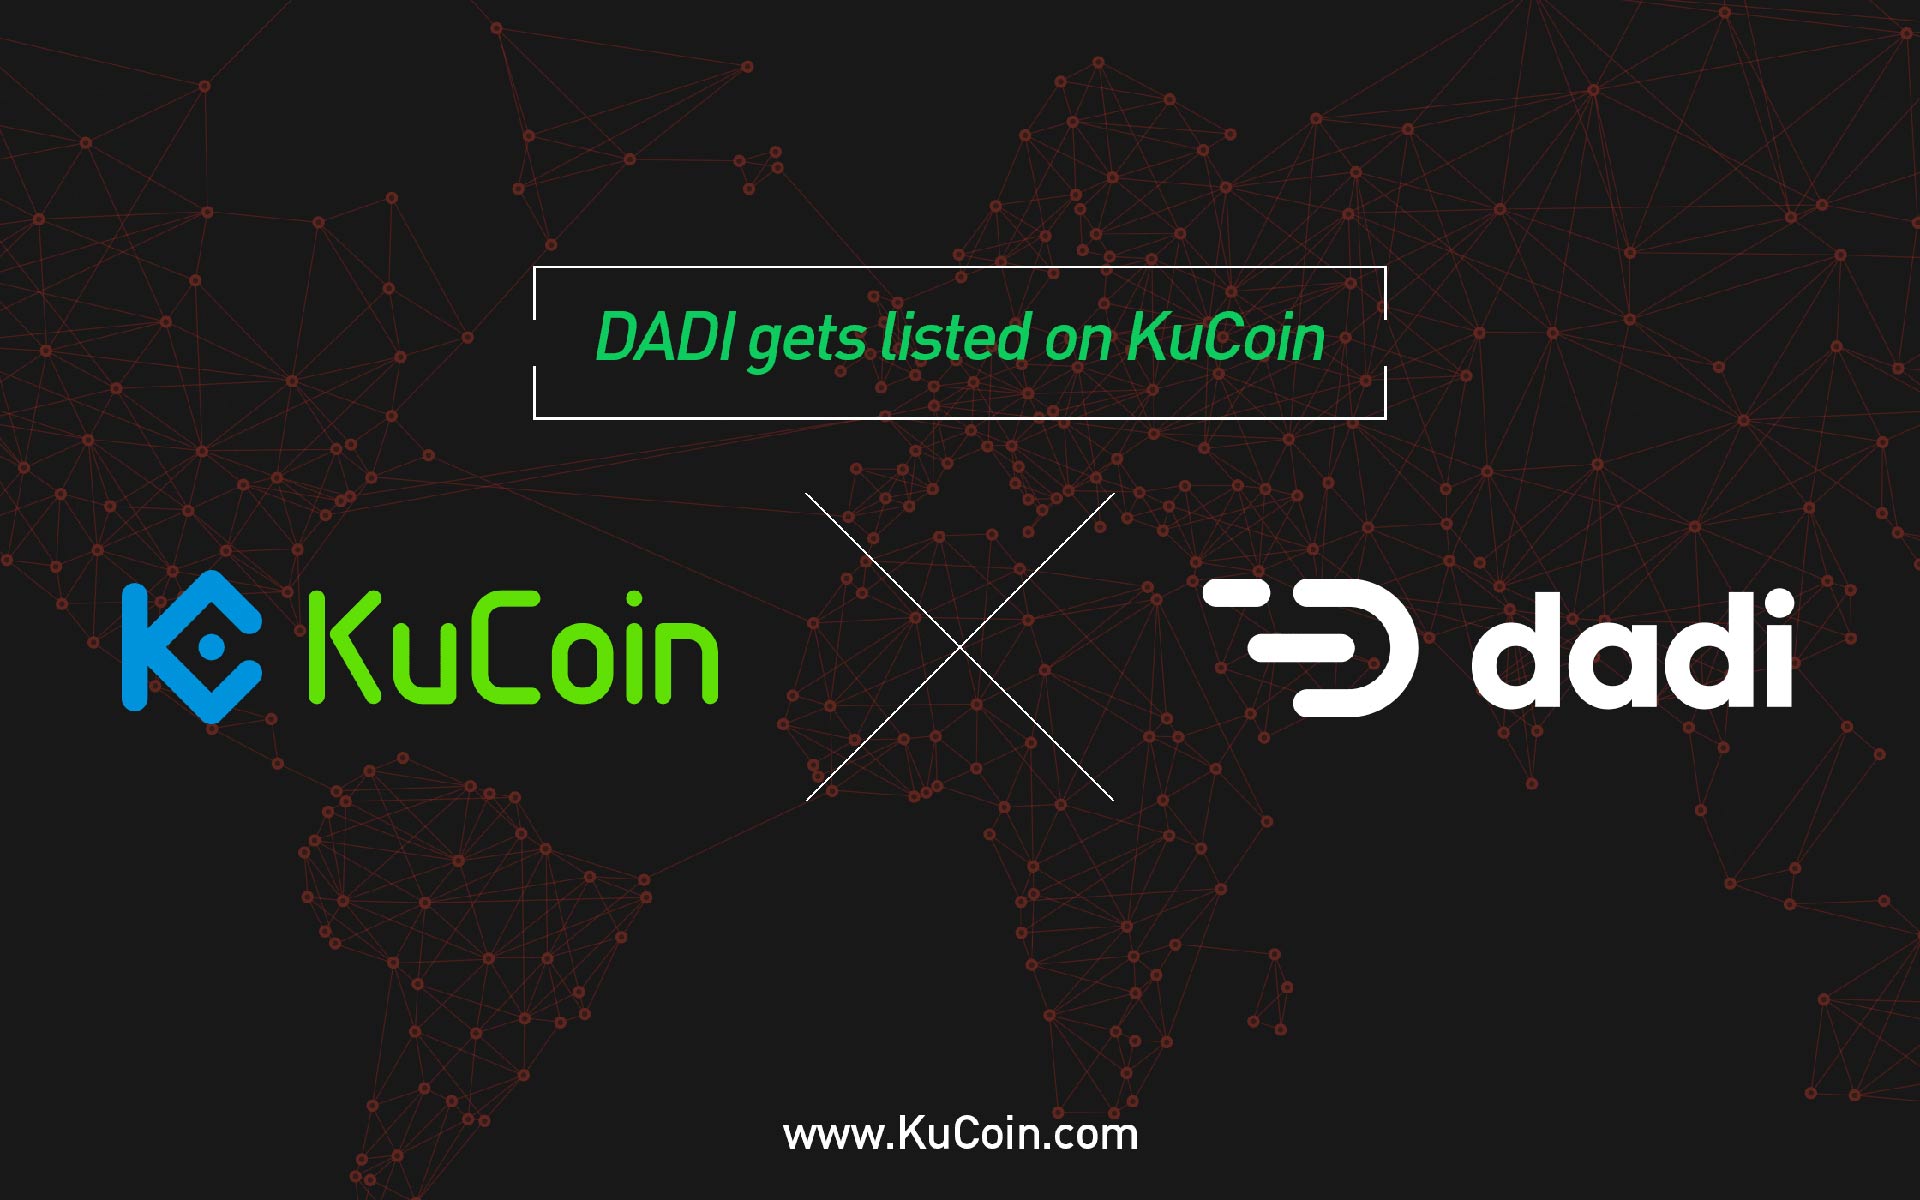 DADI Gets Listed on KuCoin